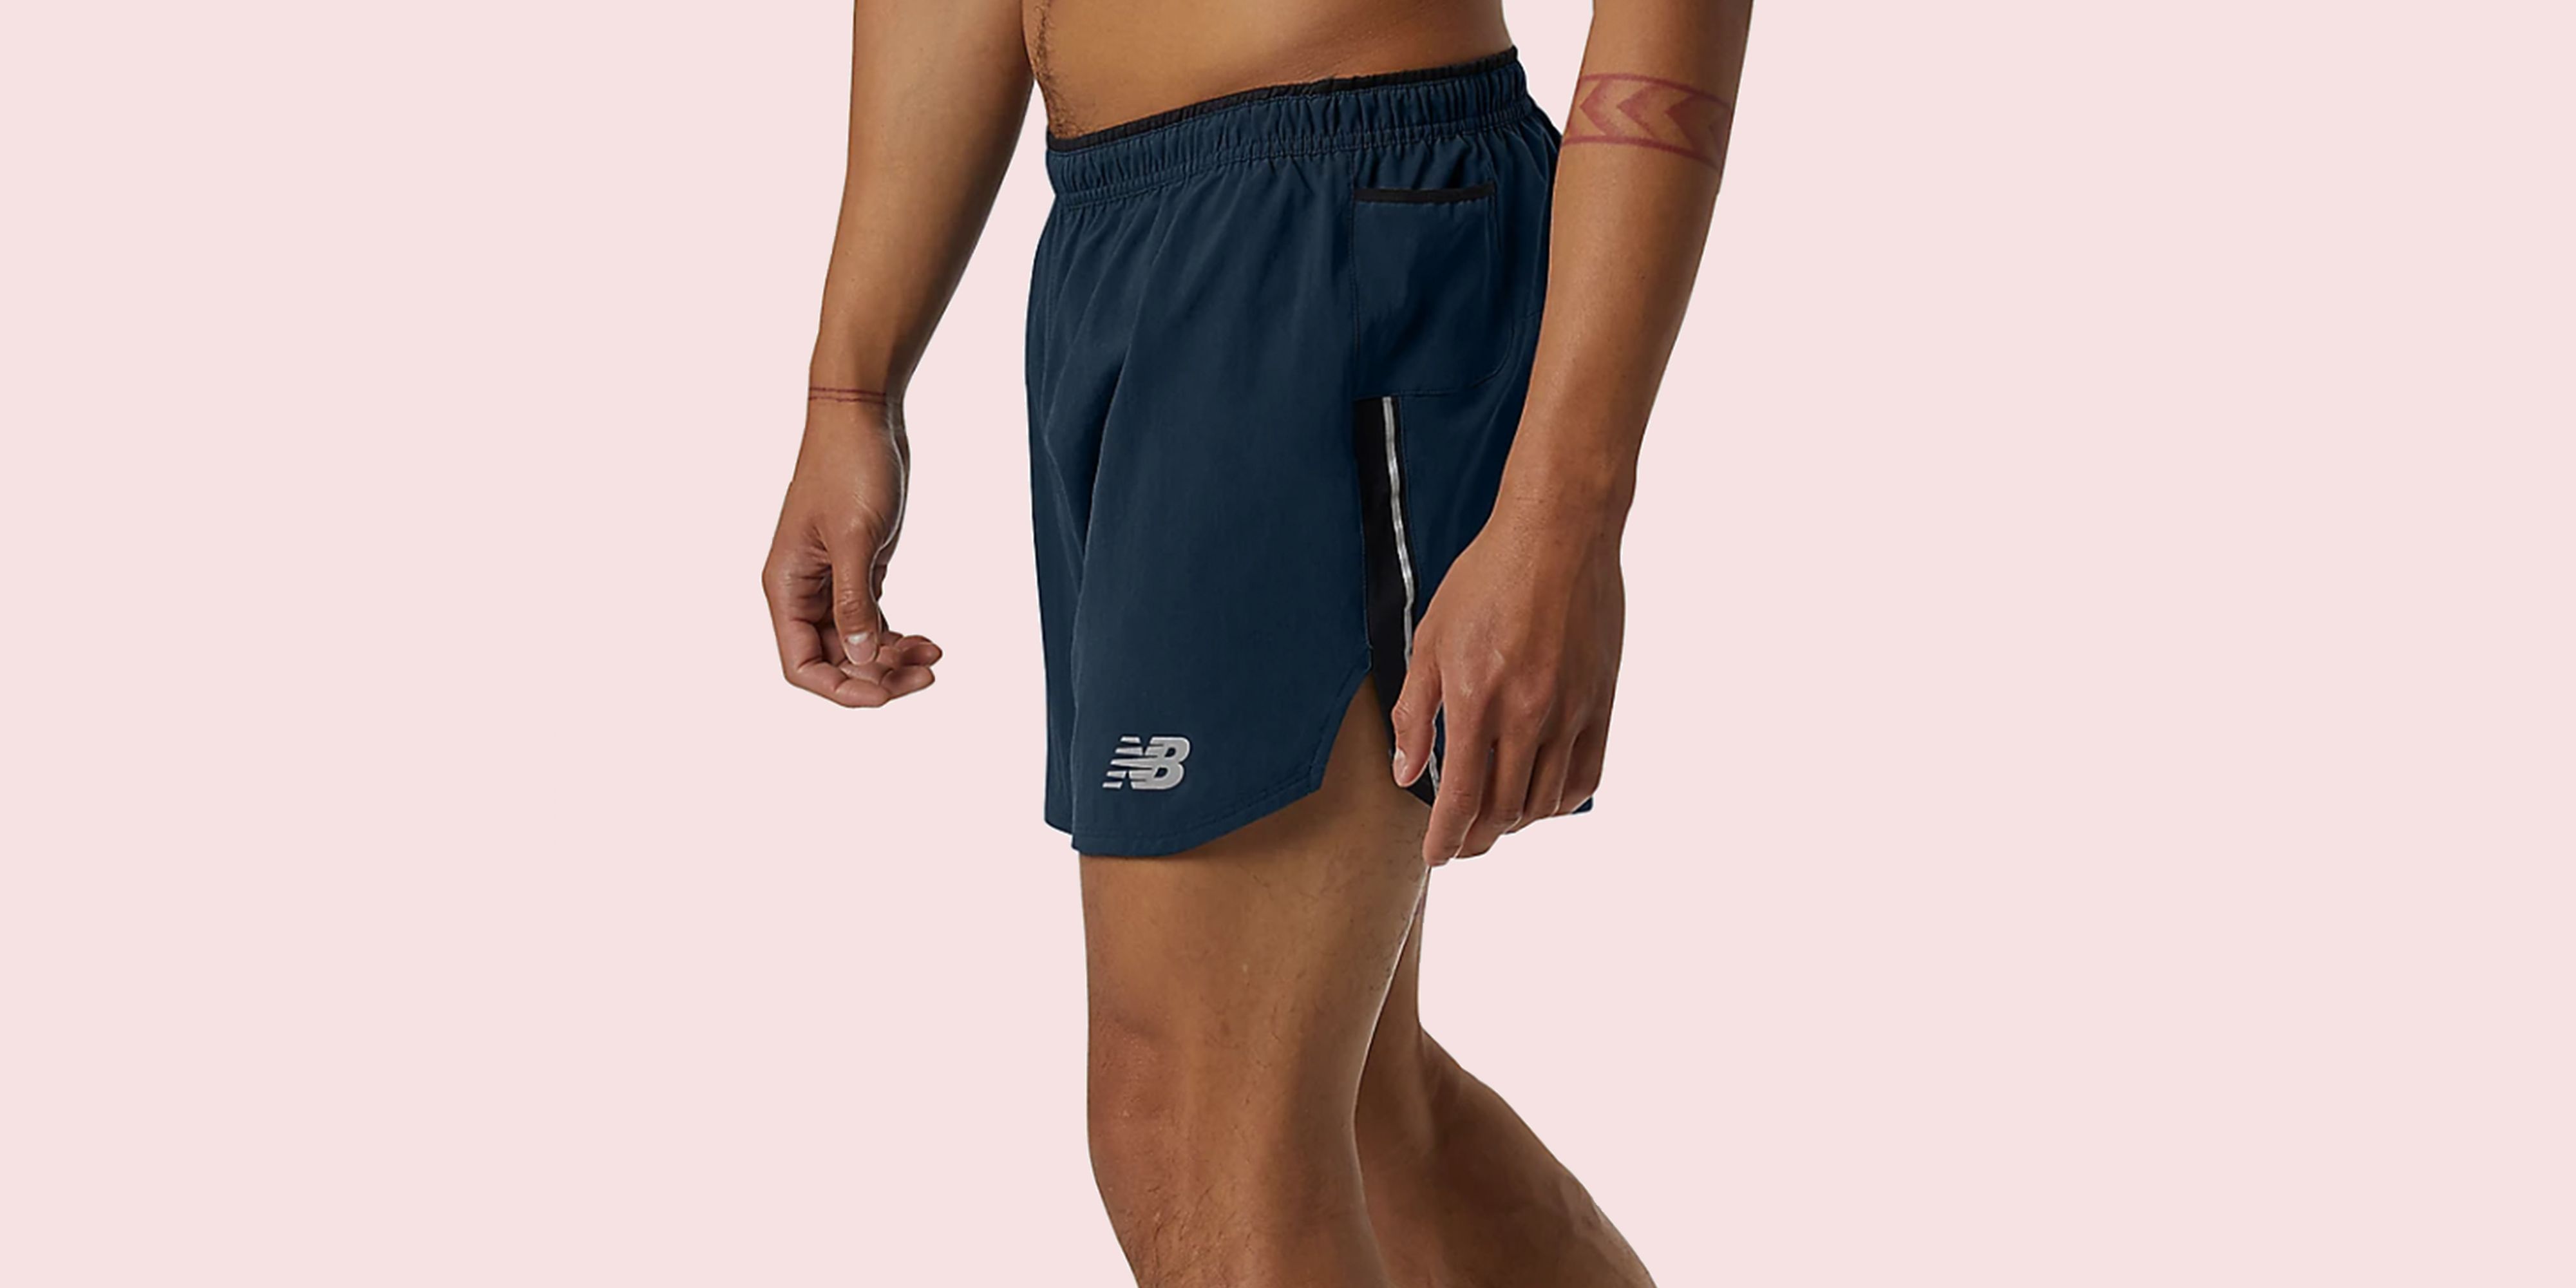 Details more than 75 running pants short inseam - in.eteachers